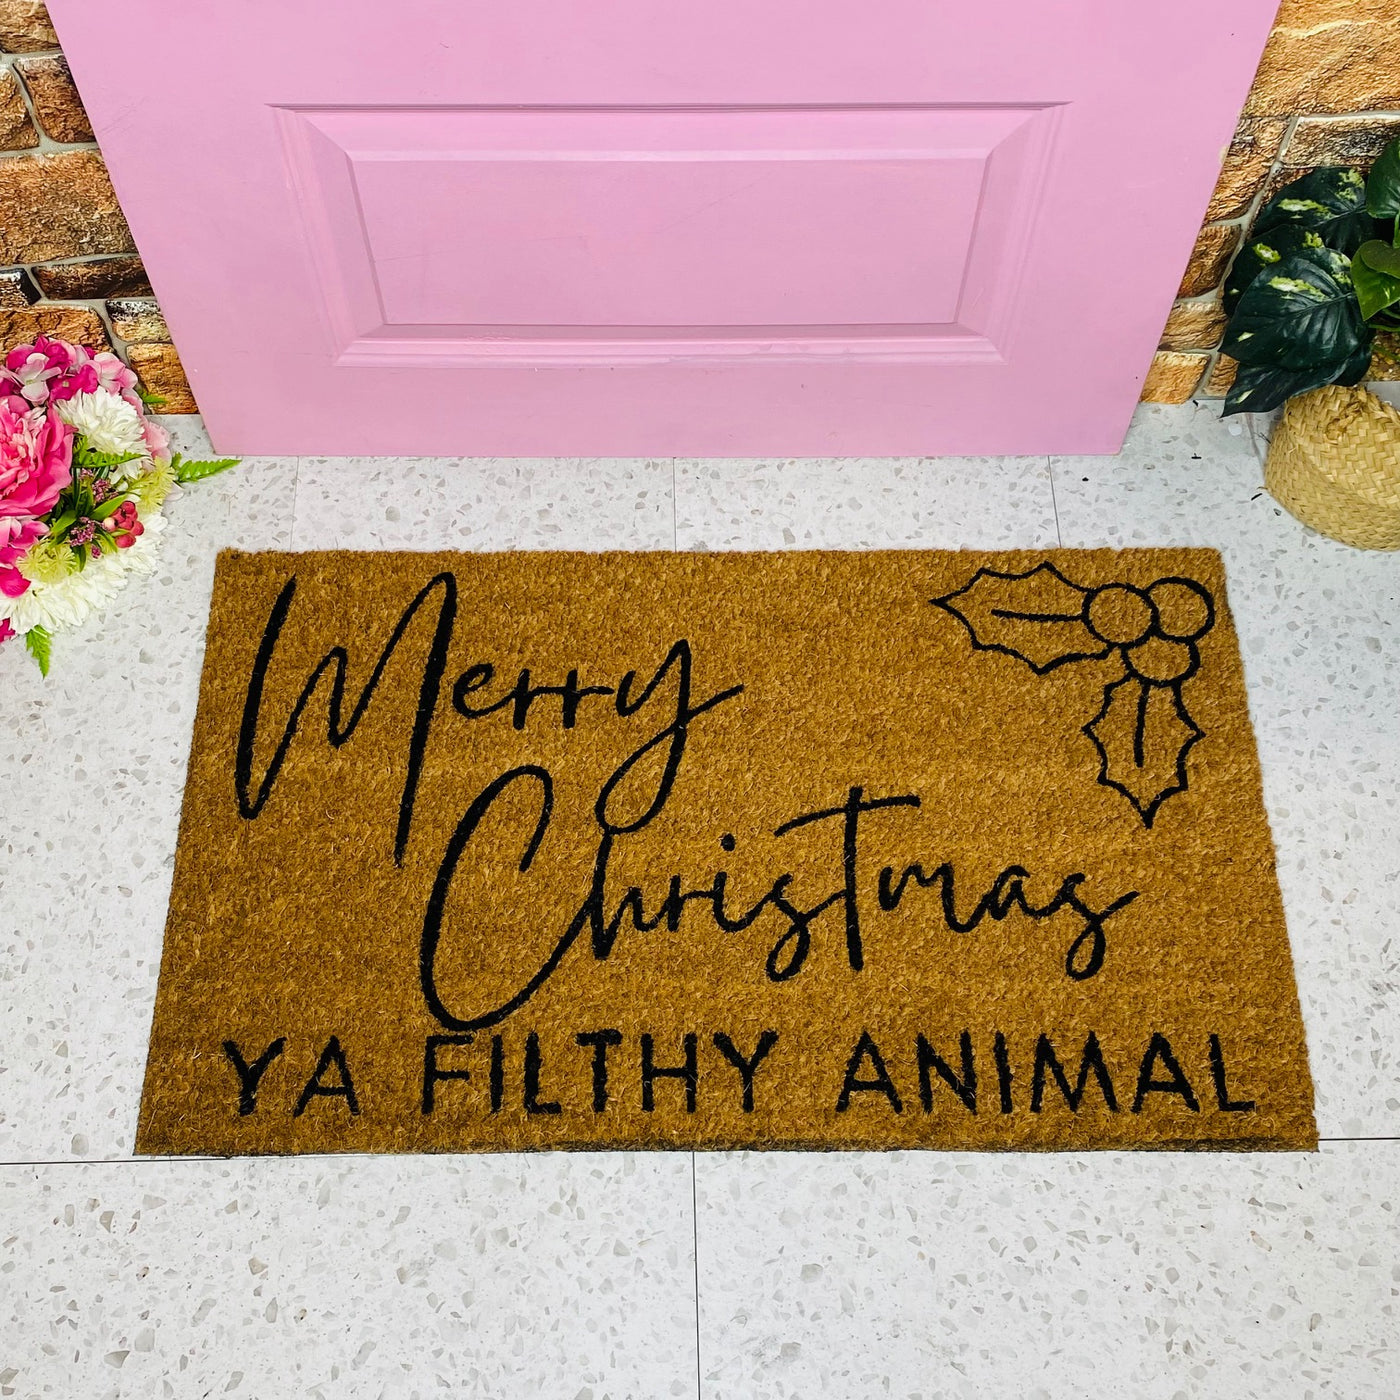 Ya Filthy Animals Stylish - Christmas Doormat